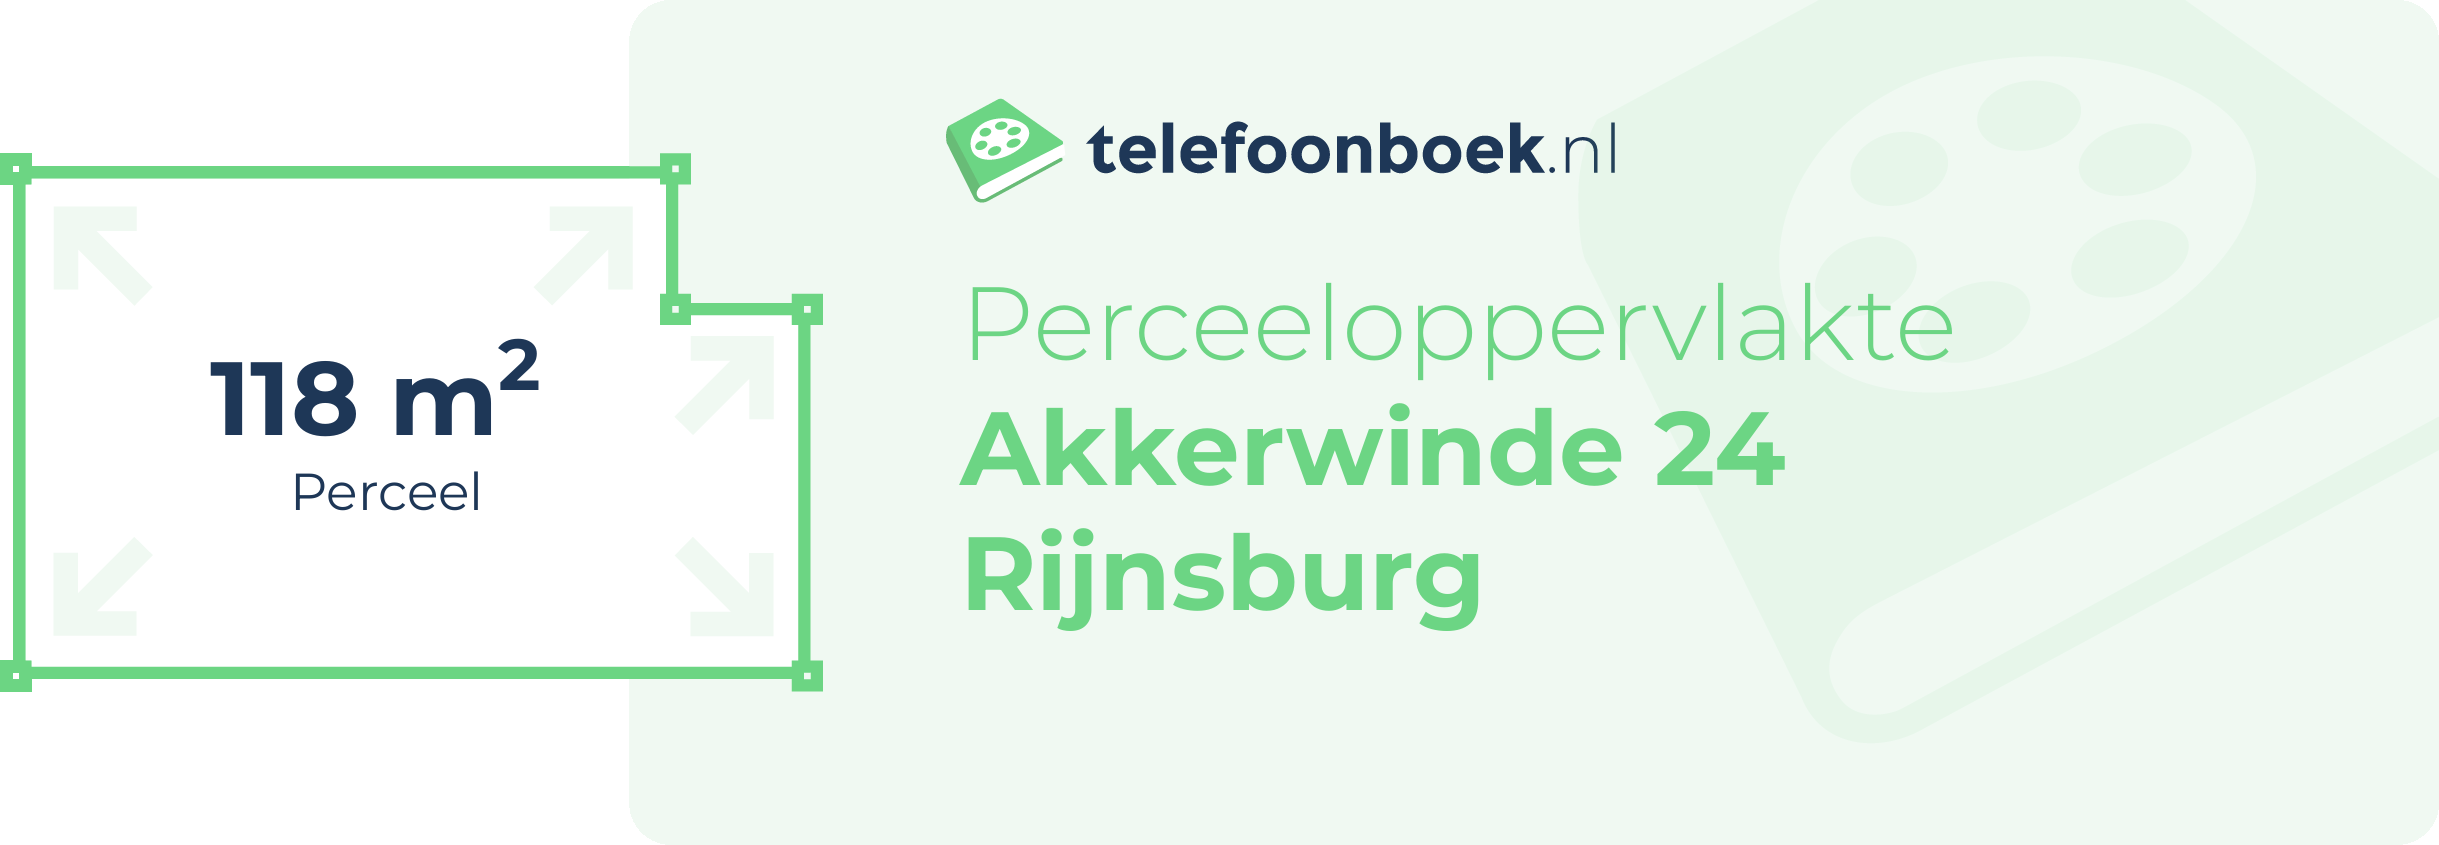 Perceeloppervlakte Akkerwinde 24 Rijnsburg